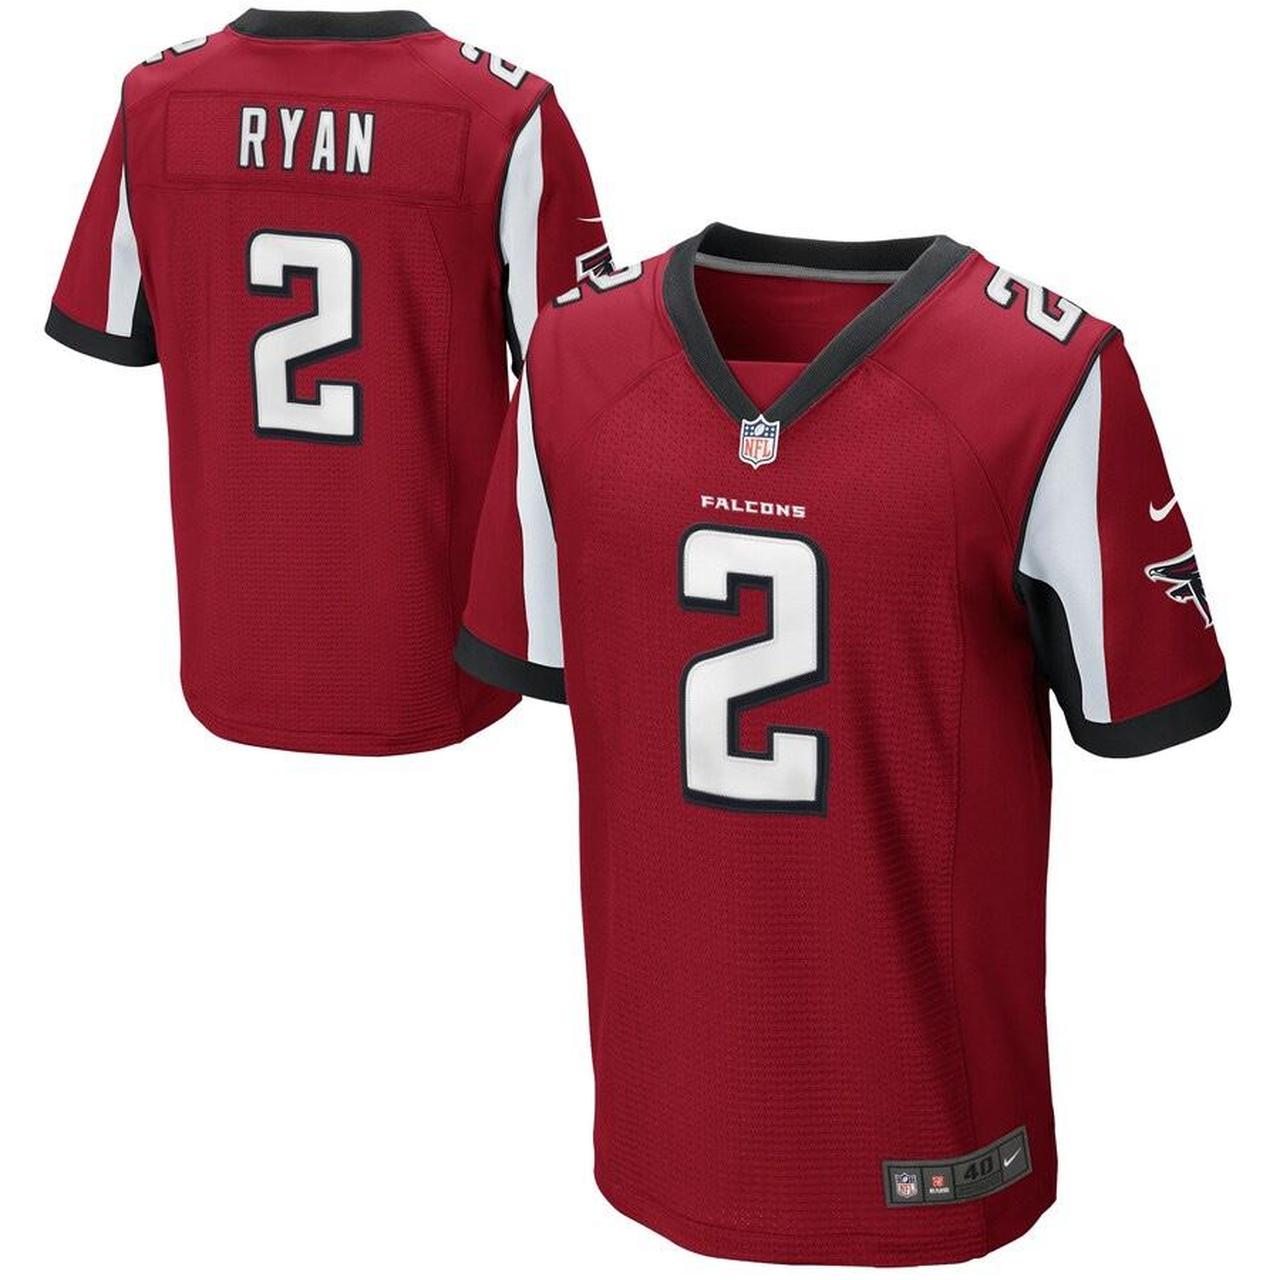 Matt Ryan #2 Atlanta Falcons Jersey player shirt